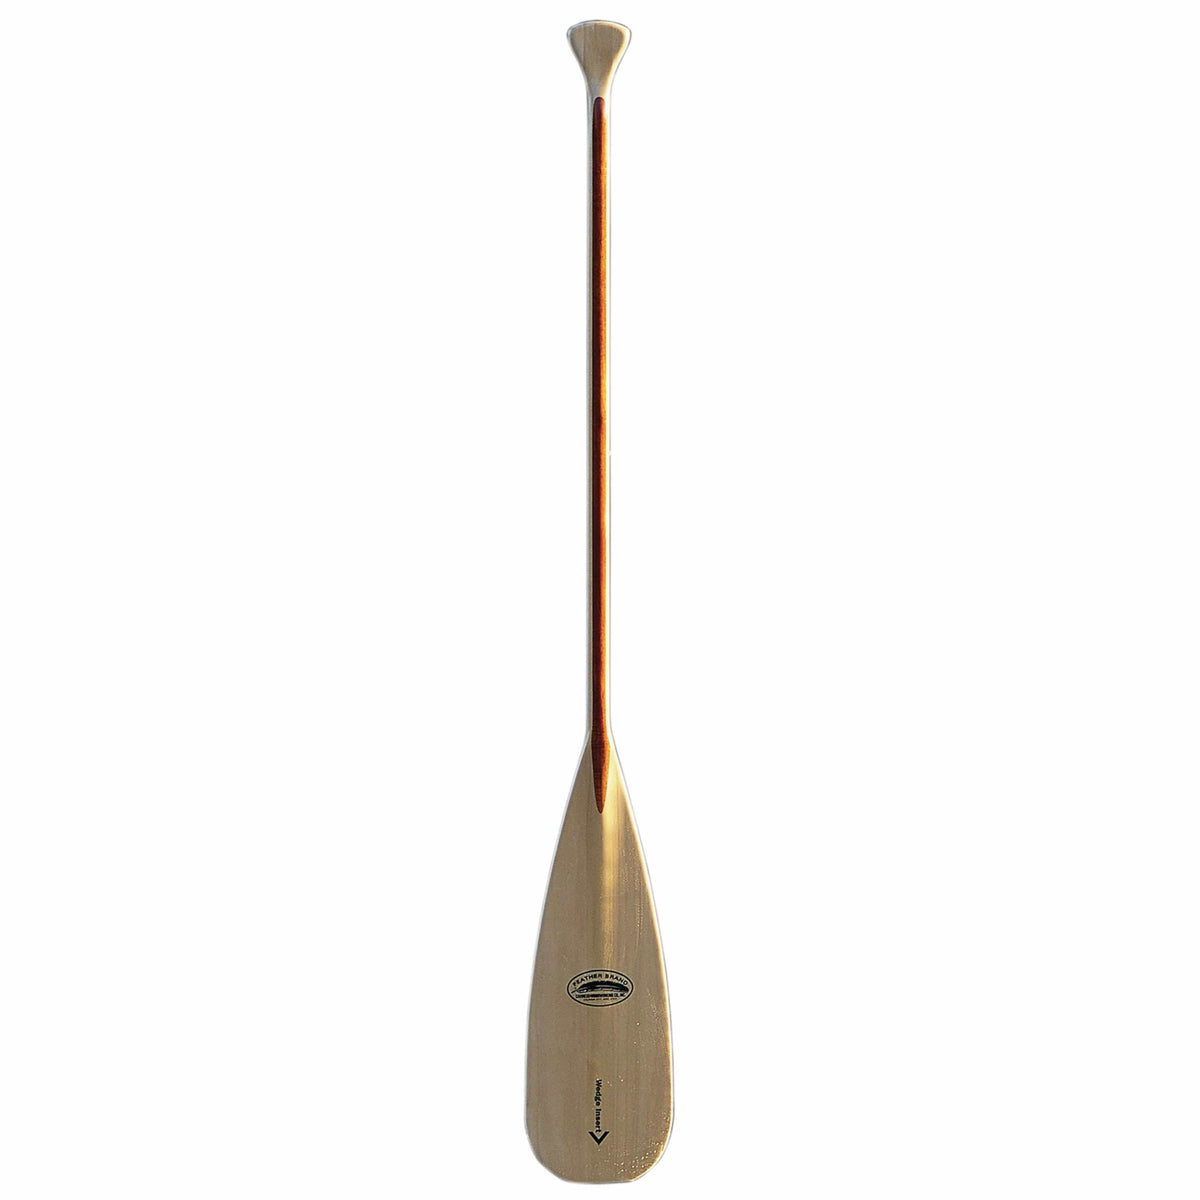 Caviness 800BL Beaver Tail Canoe Paddle Palm Grip 5' #850BL